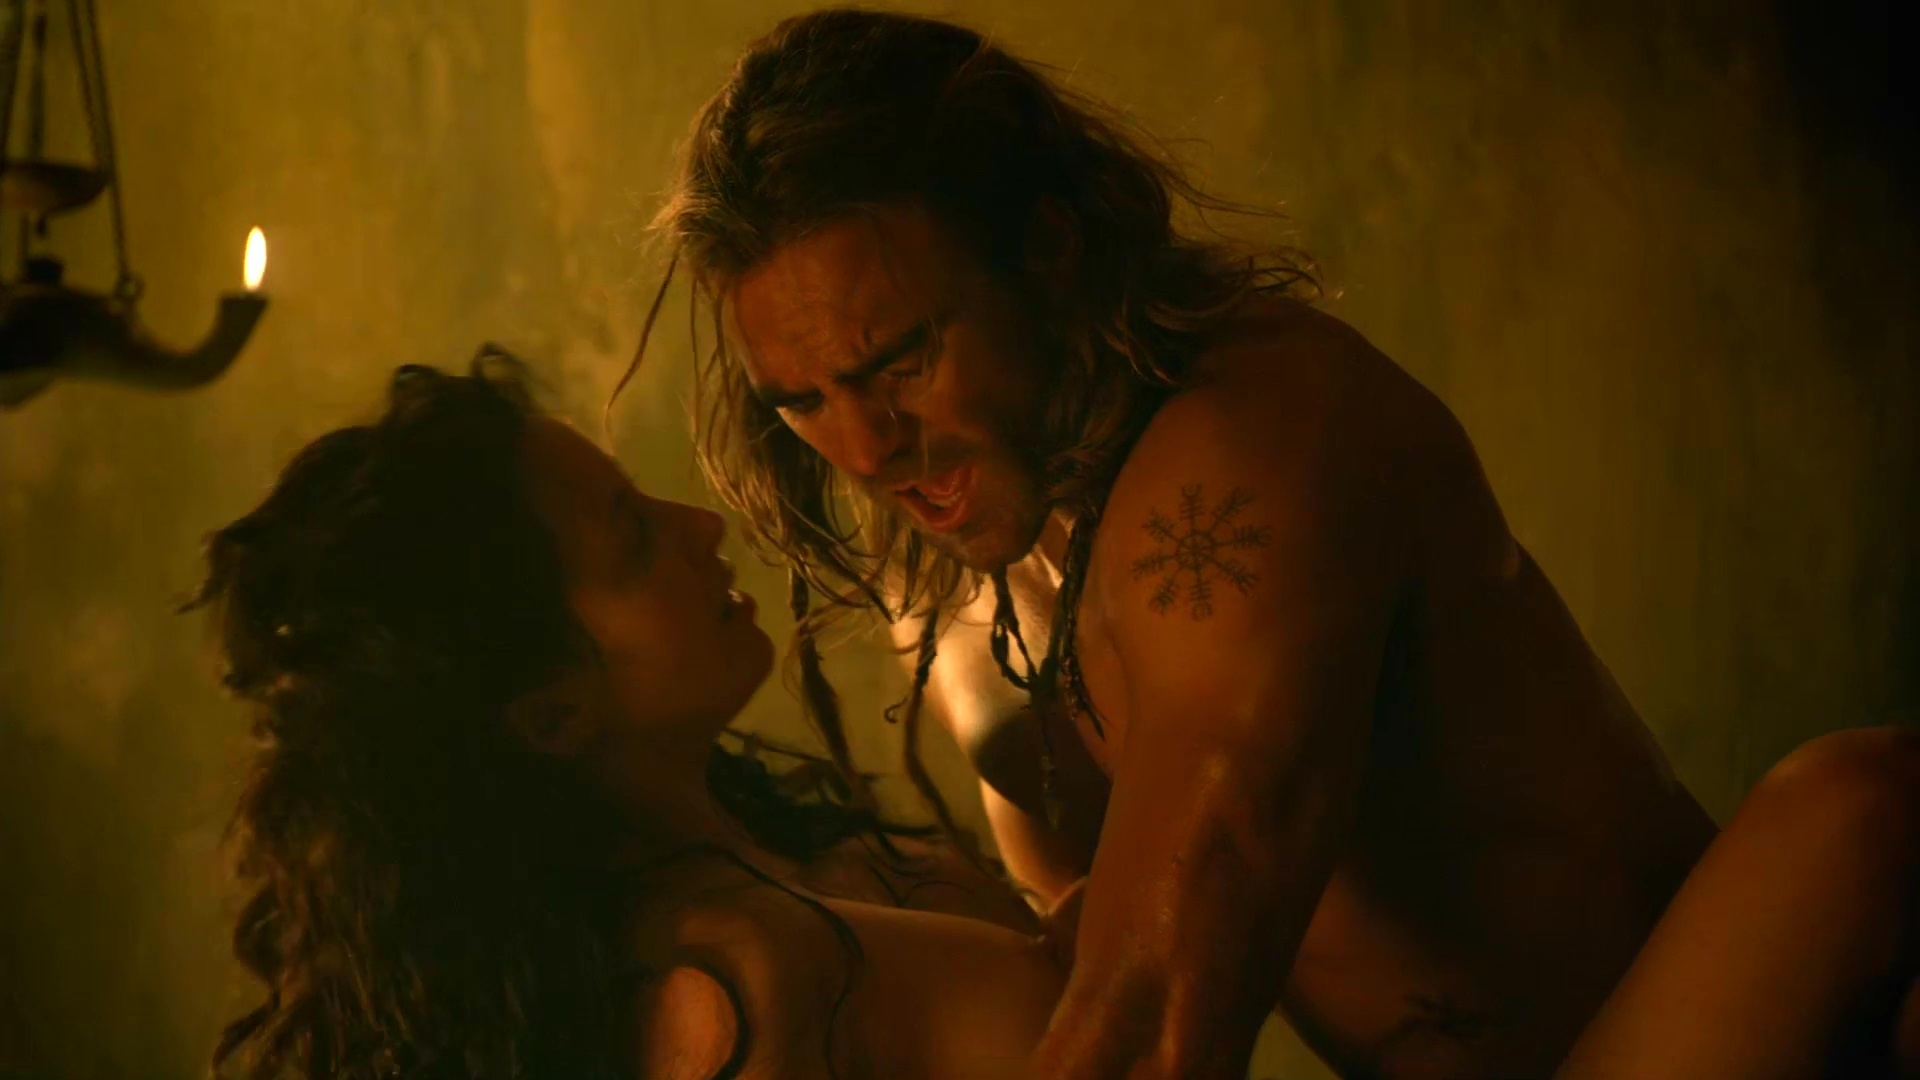 Naked Delaney Tabron In Spartacus Vengeance